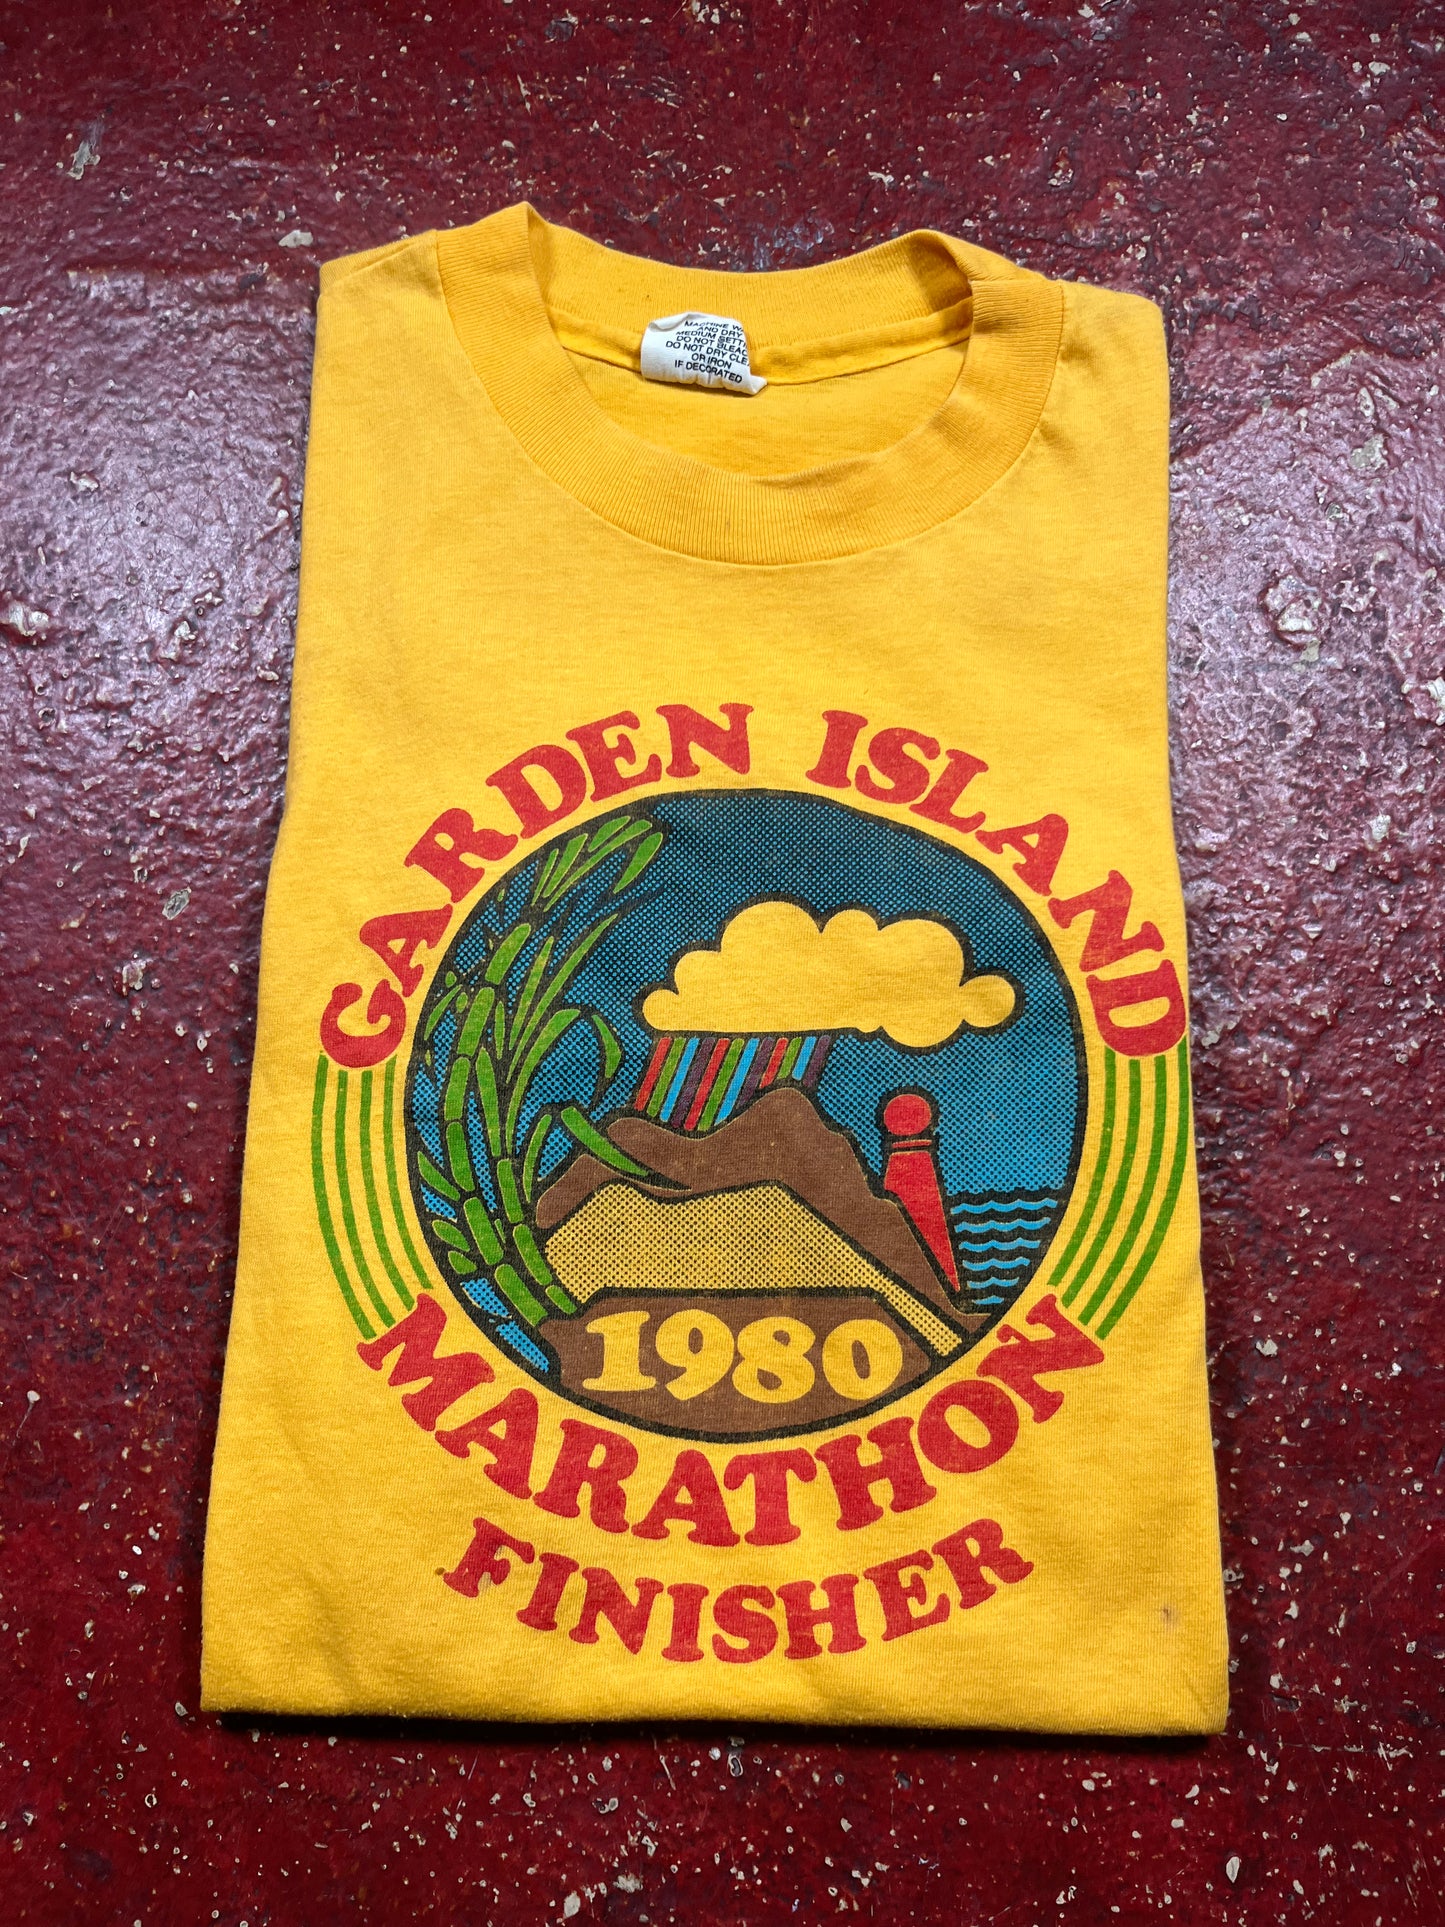 1980 Nike Garden Island Marathon Tee